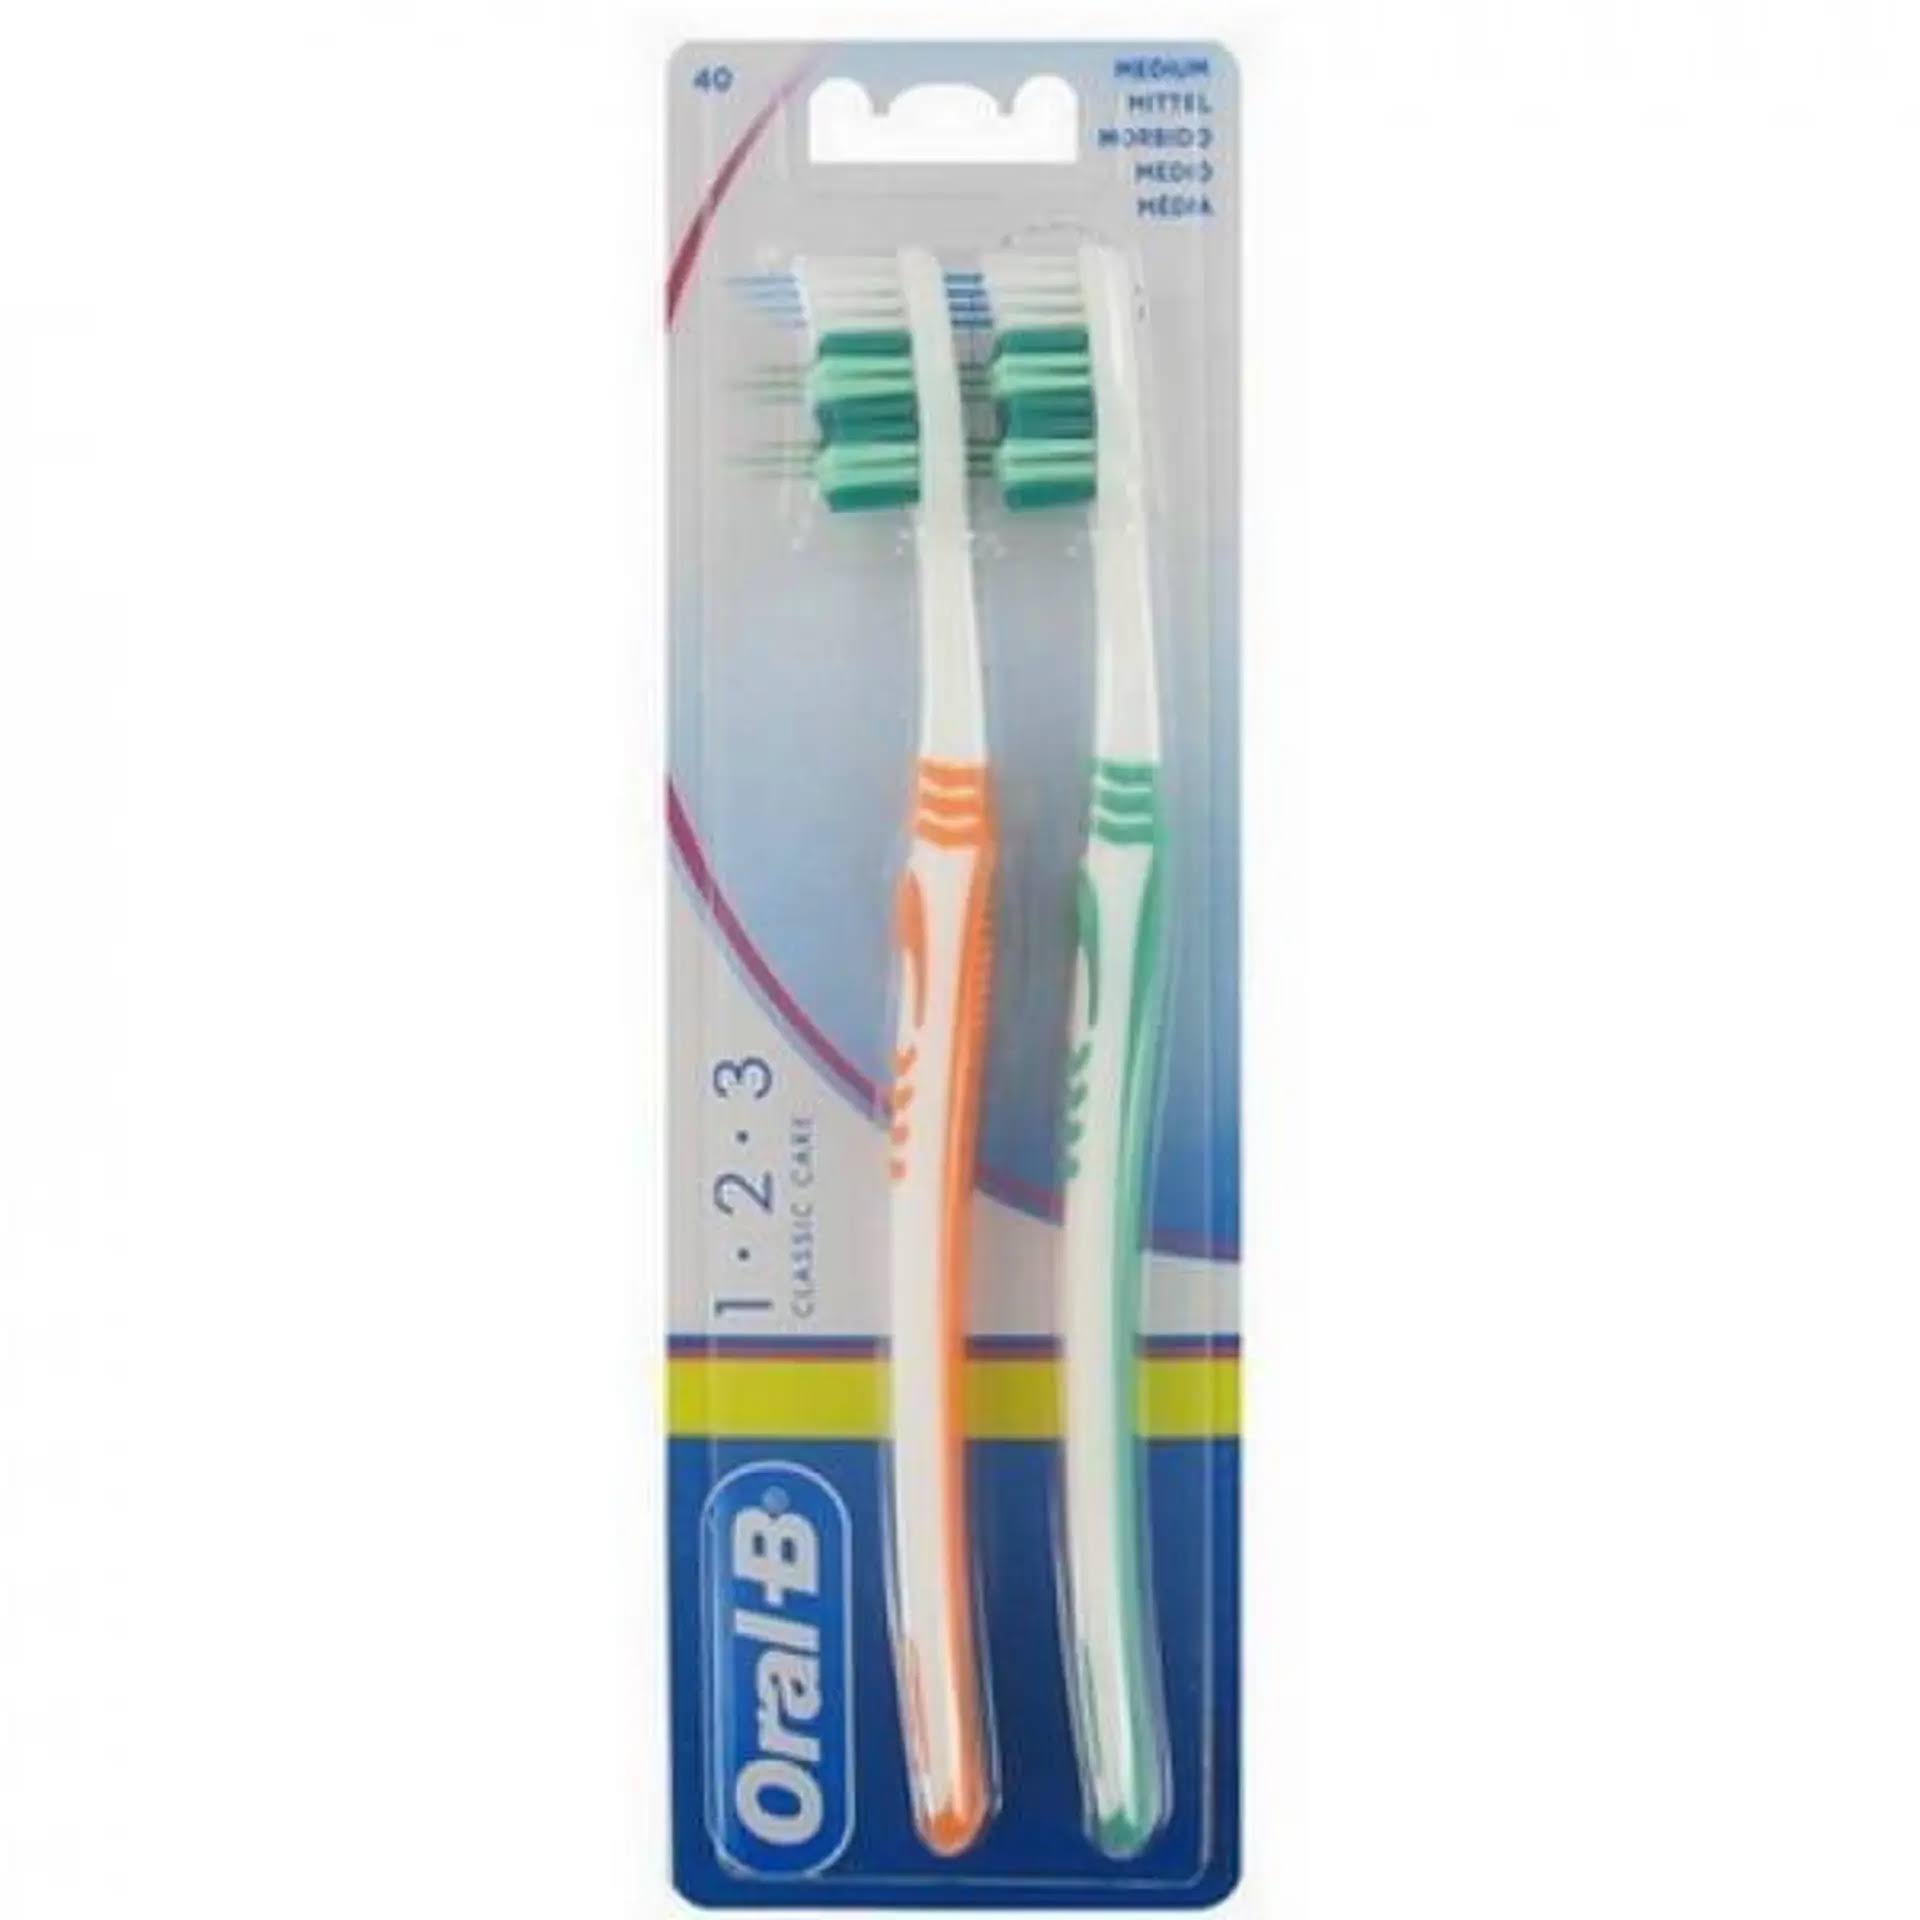 Oral-B 1 2 3 Classic Care Manual Toothbrush - Medium, 2pk